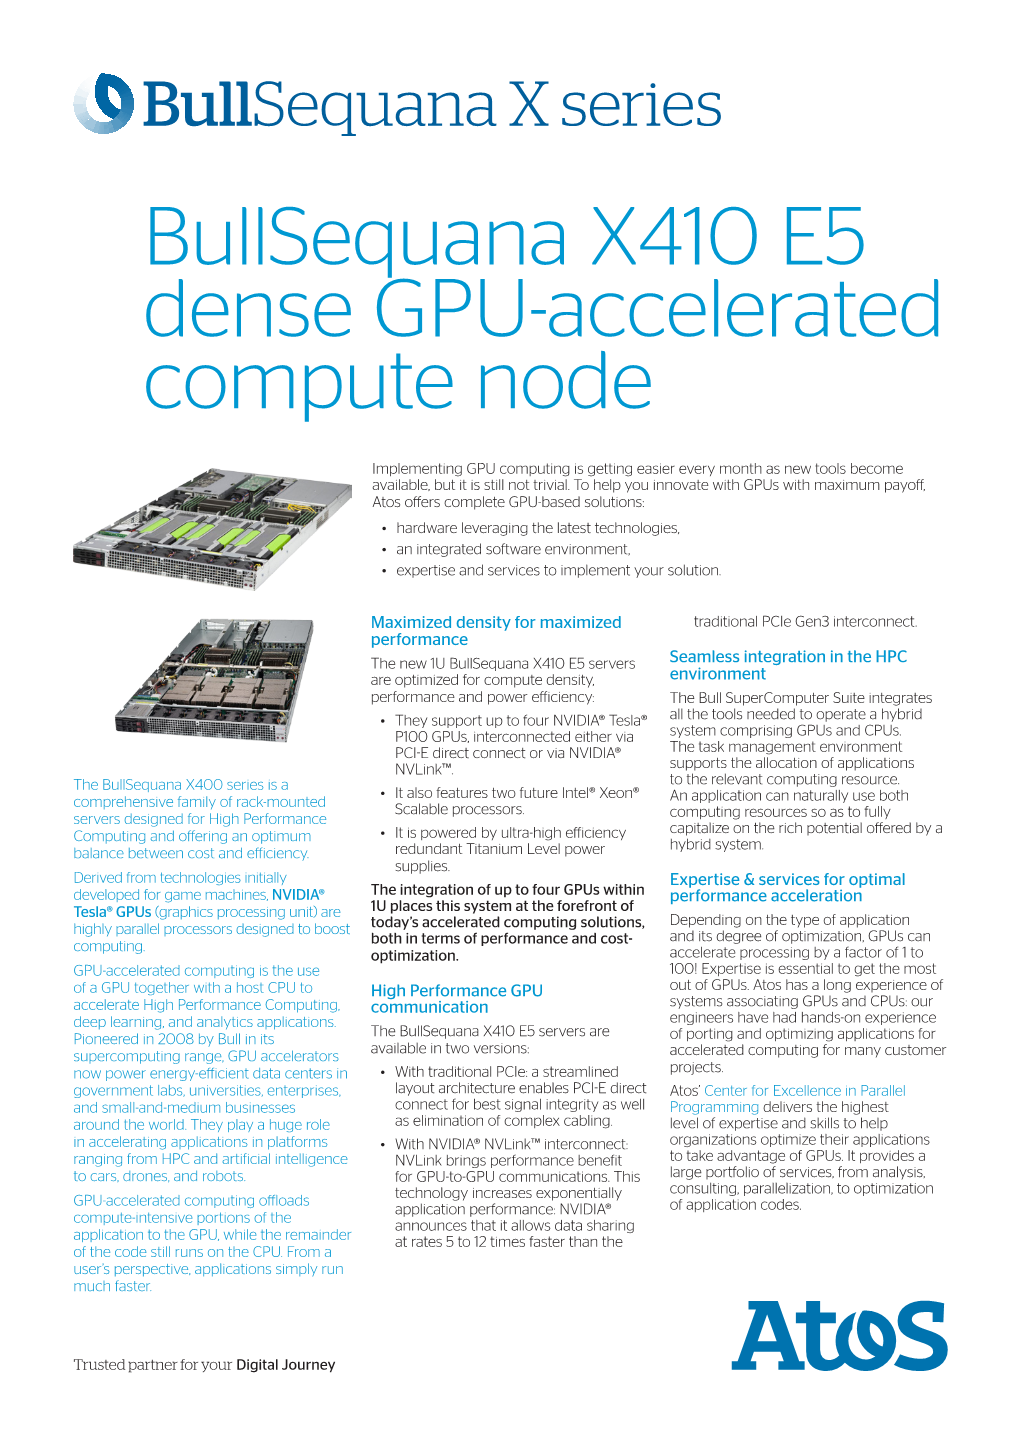 Bullsequana X410 E5 Dense GPU-Accelerated Compute Node